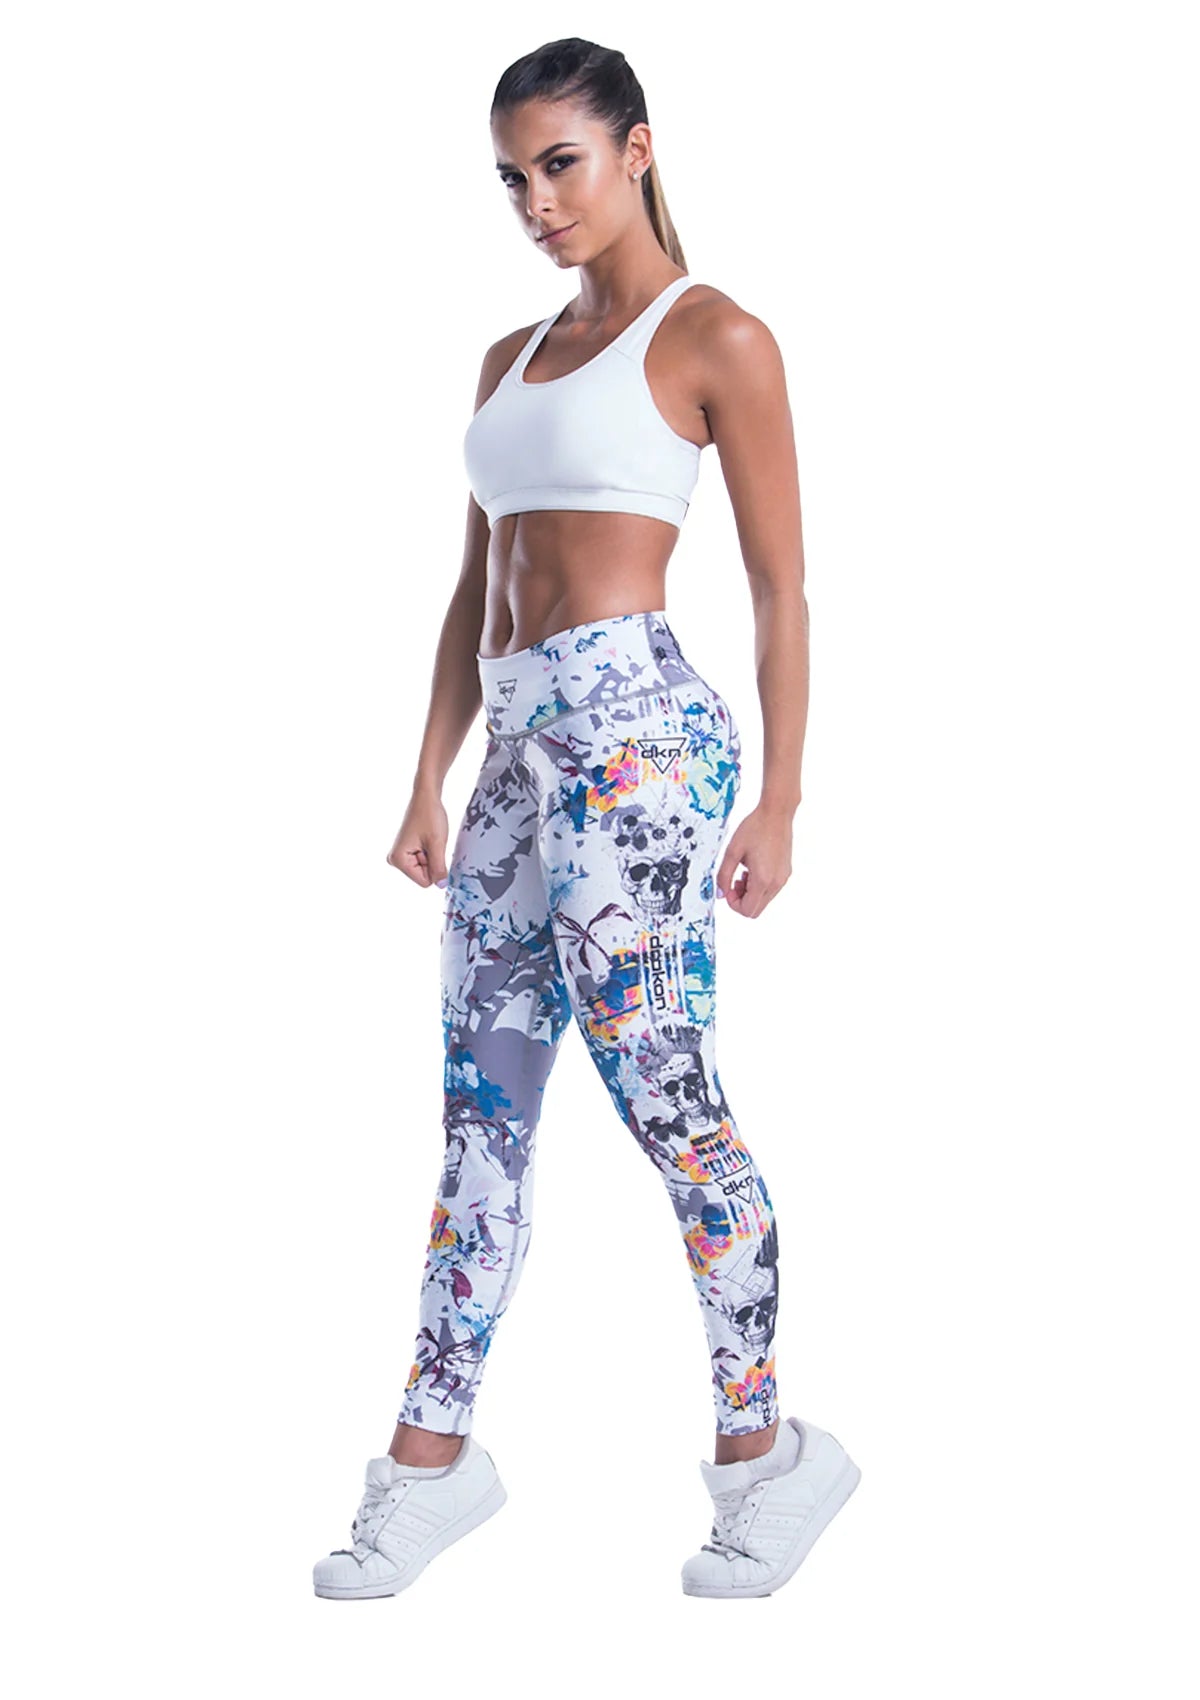 Sports Leggings - Fitness - Running - Yoga Pants -  Gym - Crossfit